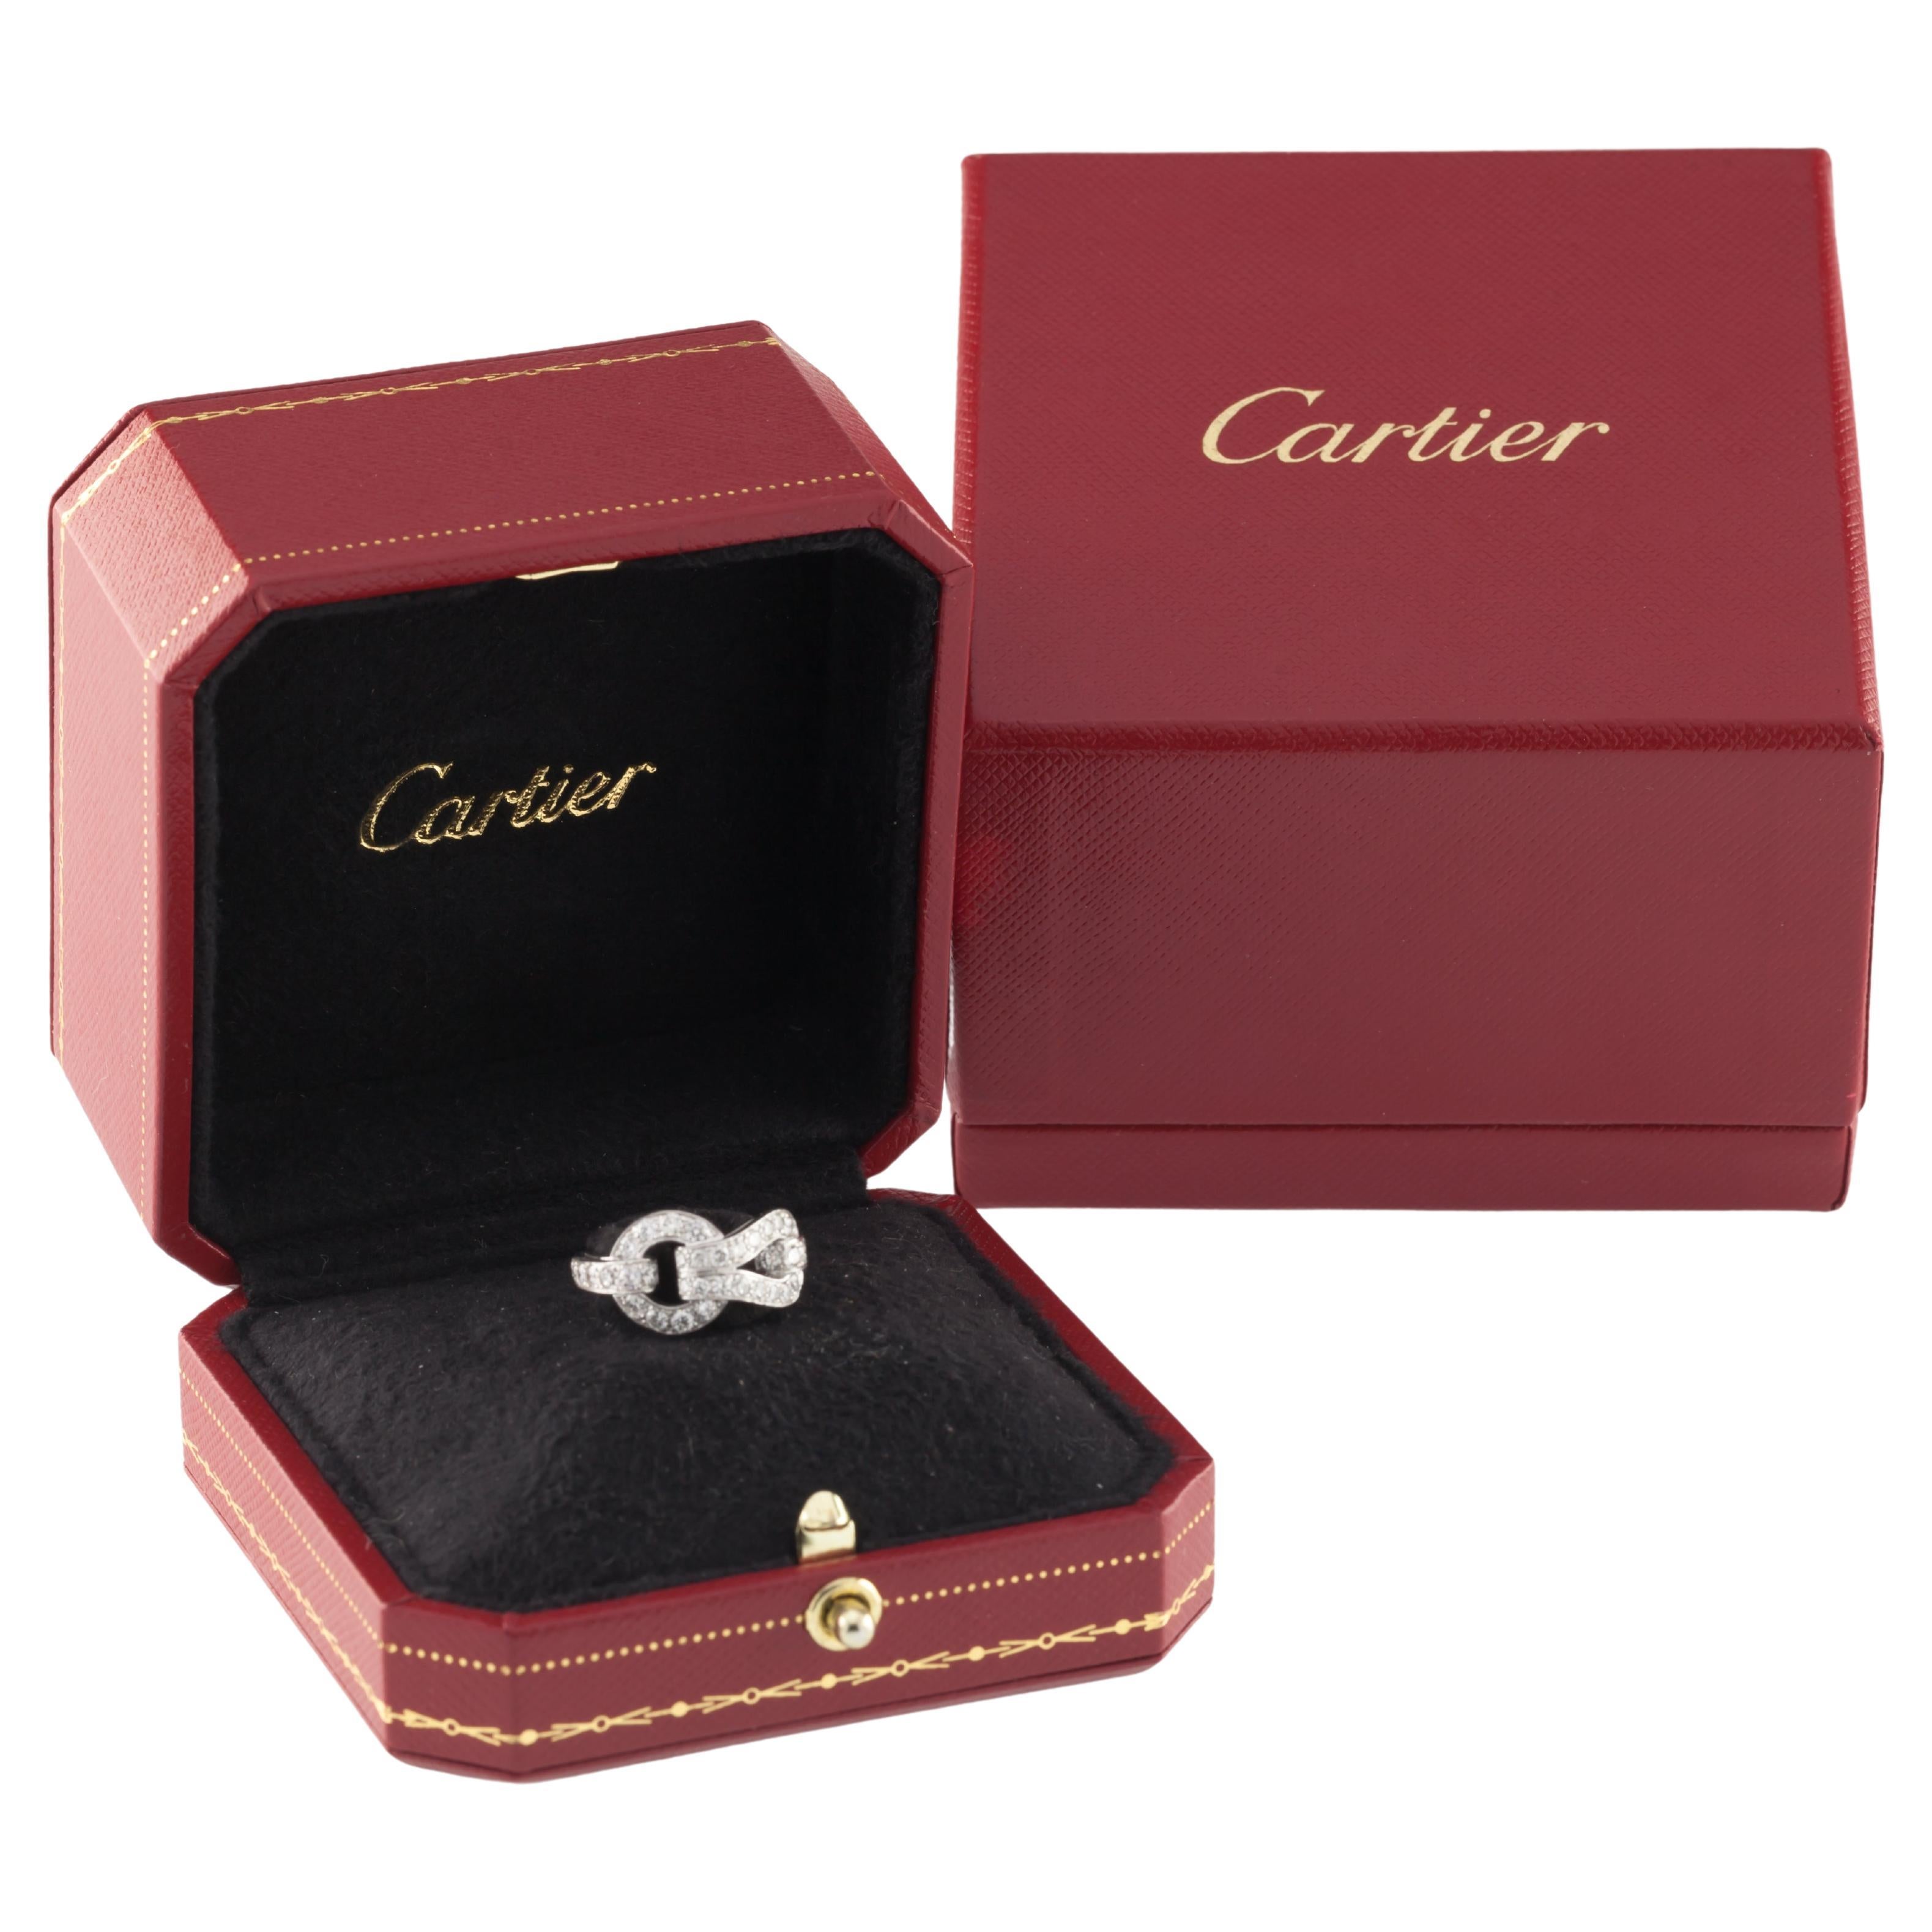 Cartier 18k White Gold Agrafe Band Ring 0.94 Ct w/ Original Box